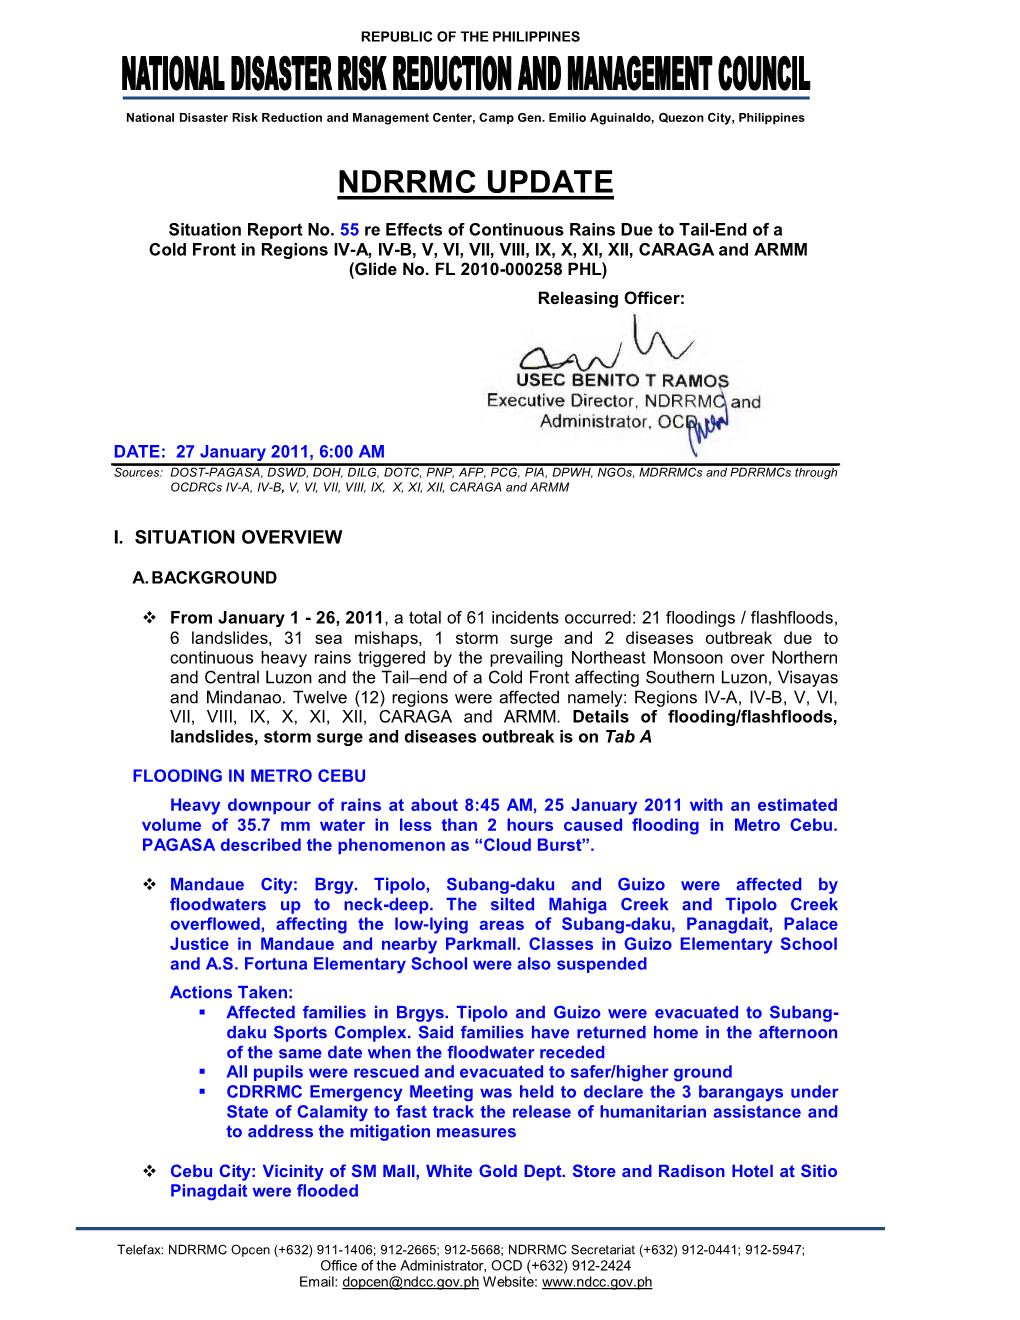 NDRRMC Update Sitrep No. 55 Flooding & Landslides